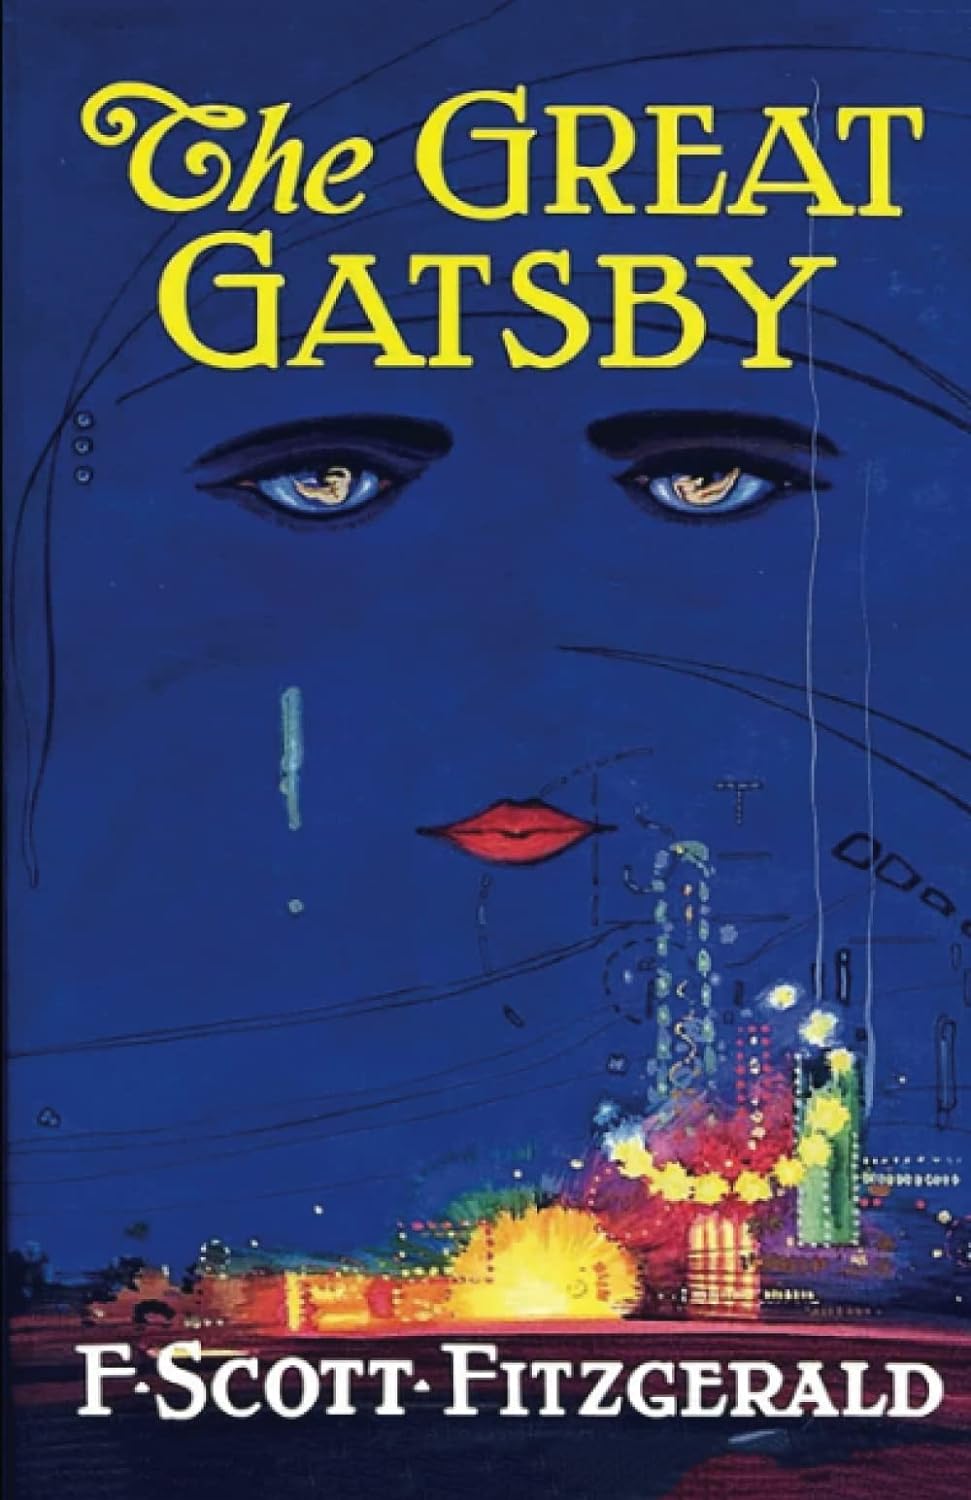 The Great Gatsby - by F. Scott Fitzgerald